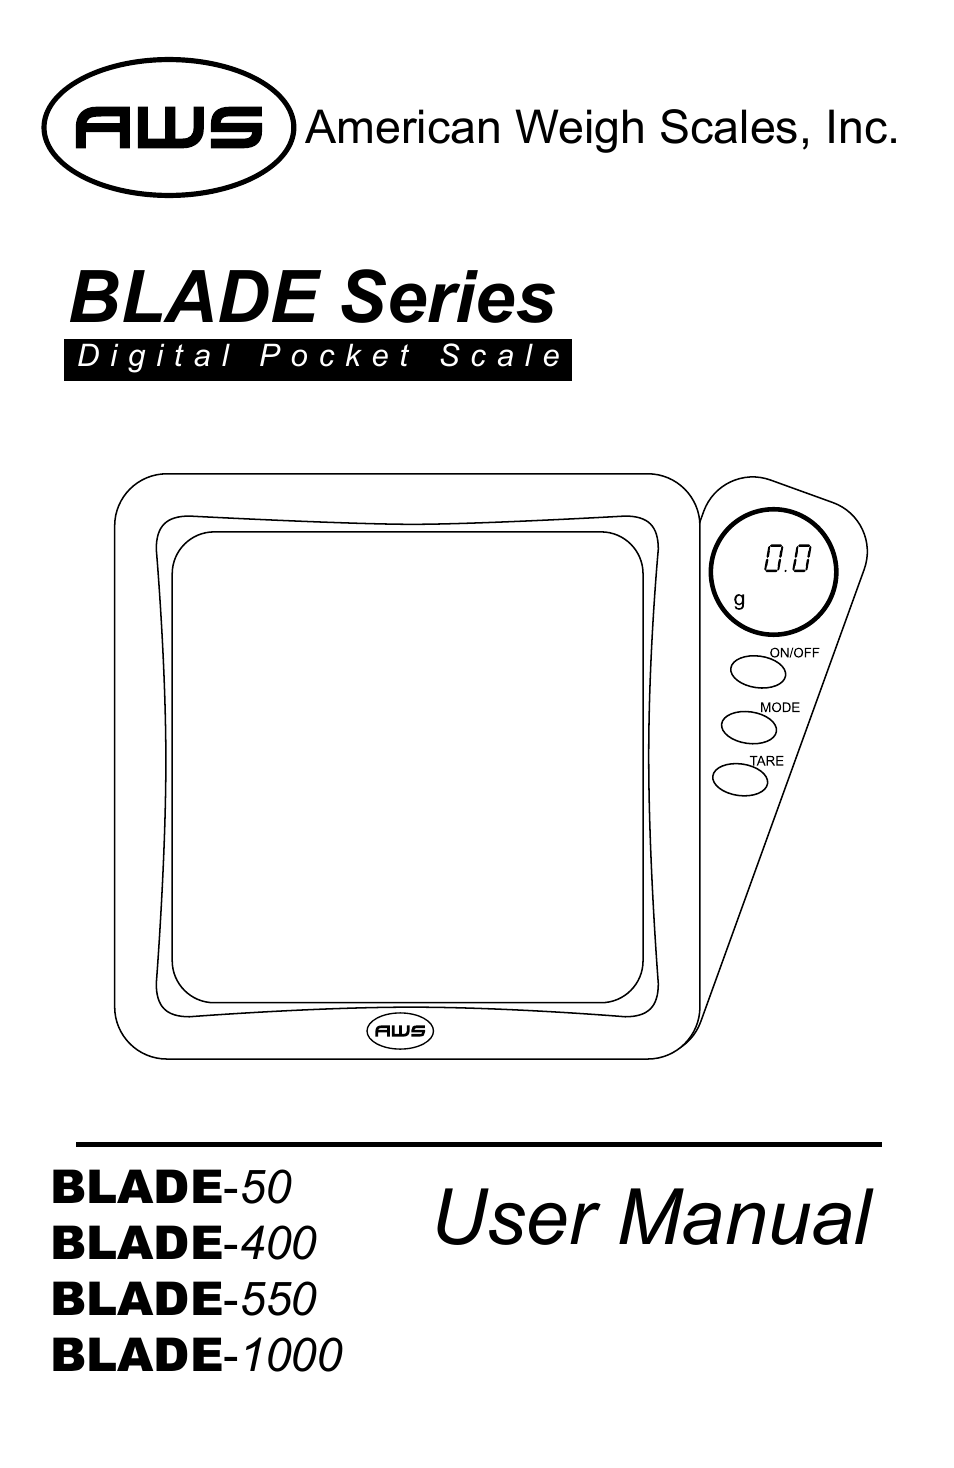 Blade-50